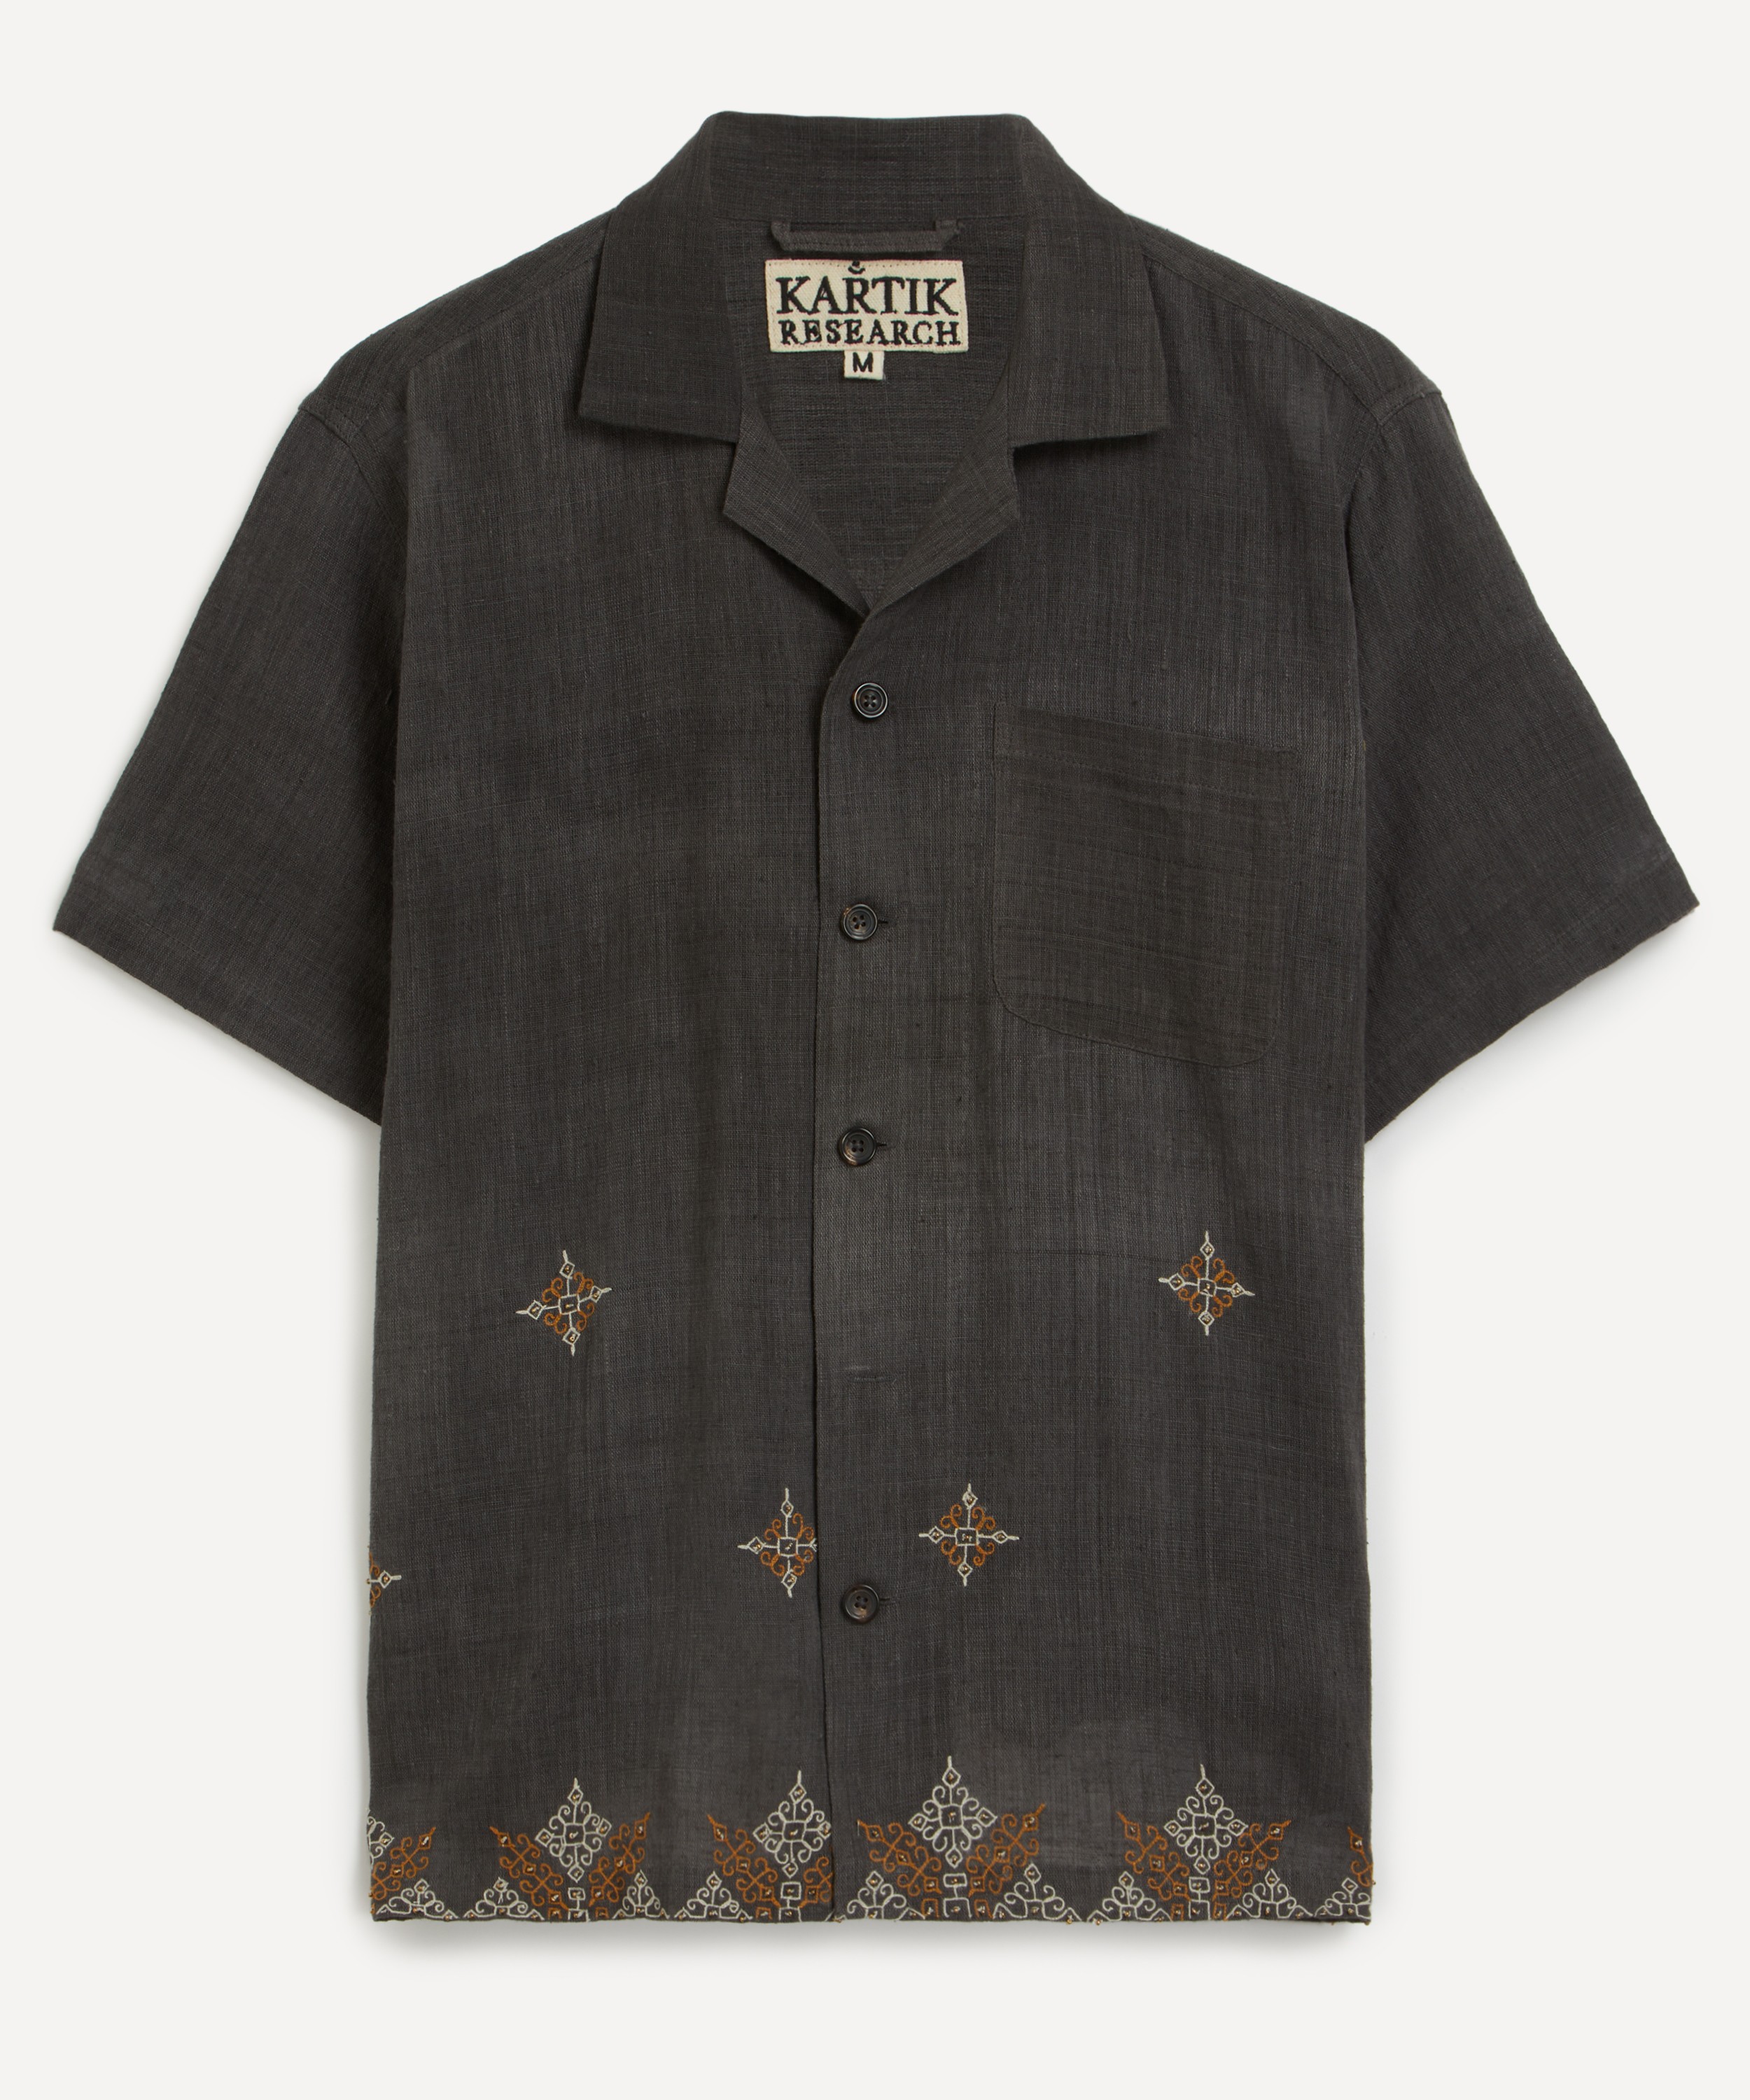 Kartik Research - Kasuti Handwoven Embroidered Cotton Shirt image number 0